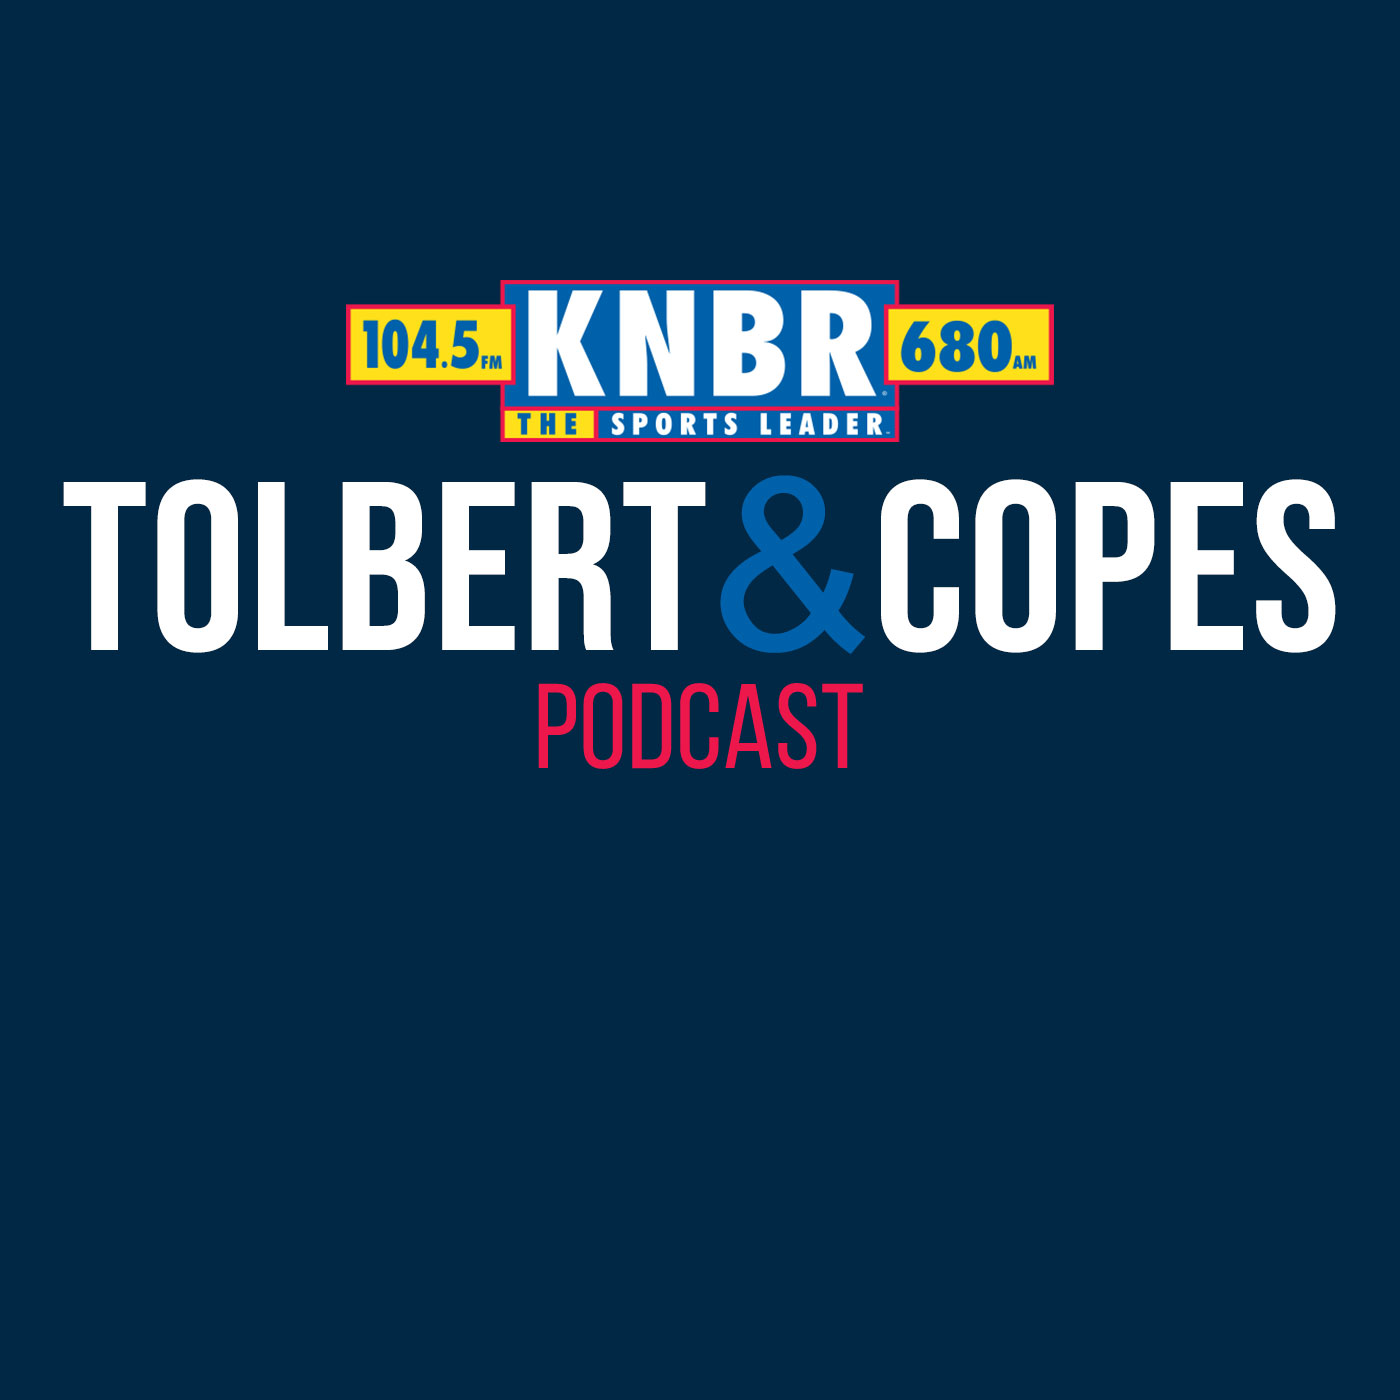 2-15 Tim Kawakami joins Tolbert & Copes and discuss the Warriors season at 29-29 at the All Star Break